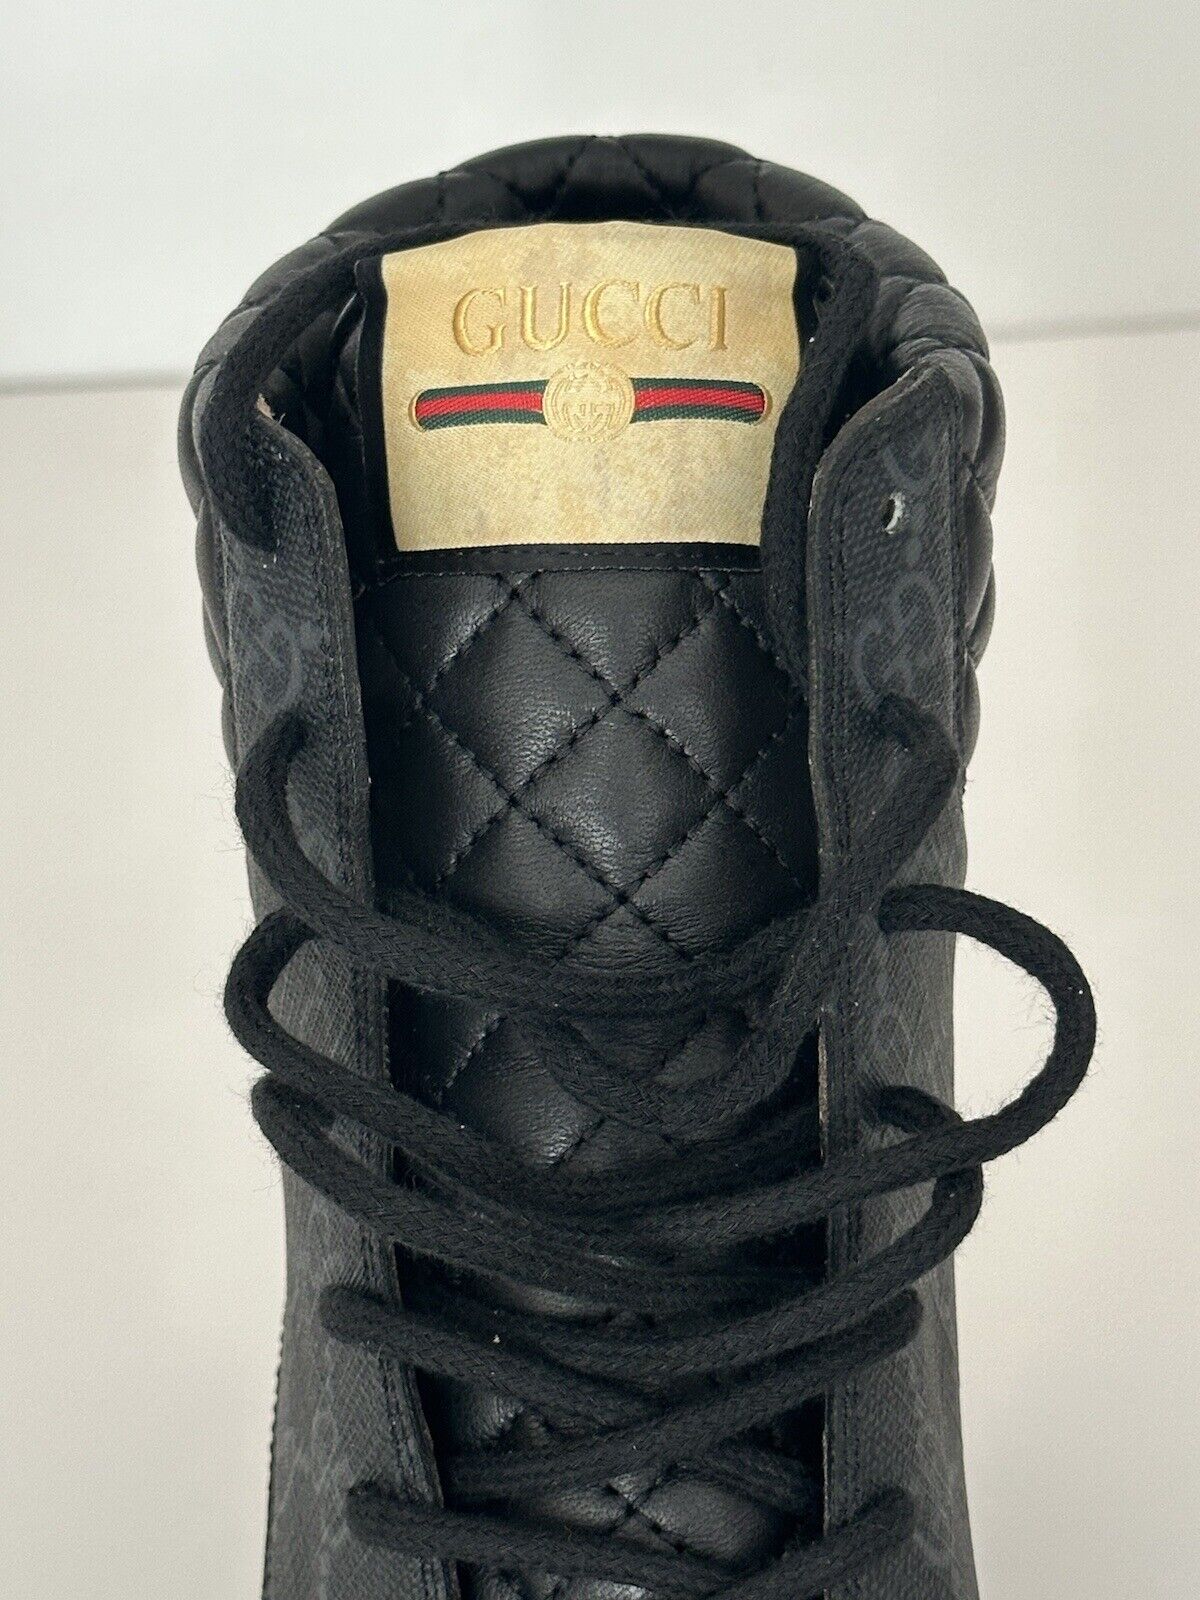 Gucci  Women's GG Supreme Leather Black Boots 9 US (39 Euro) 659691 IT NIB